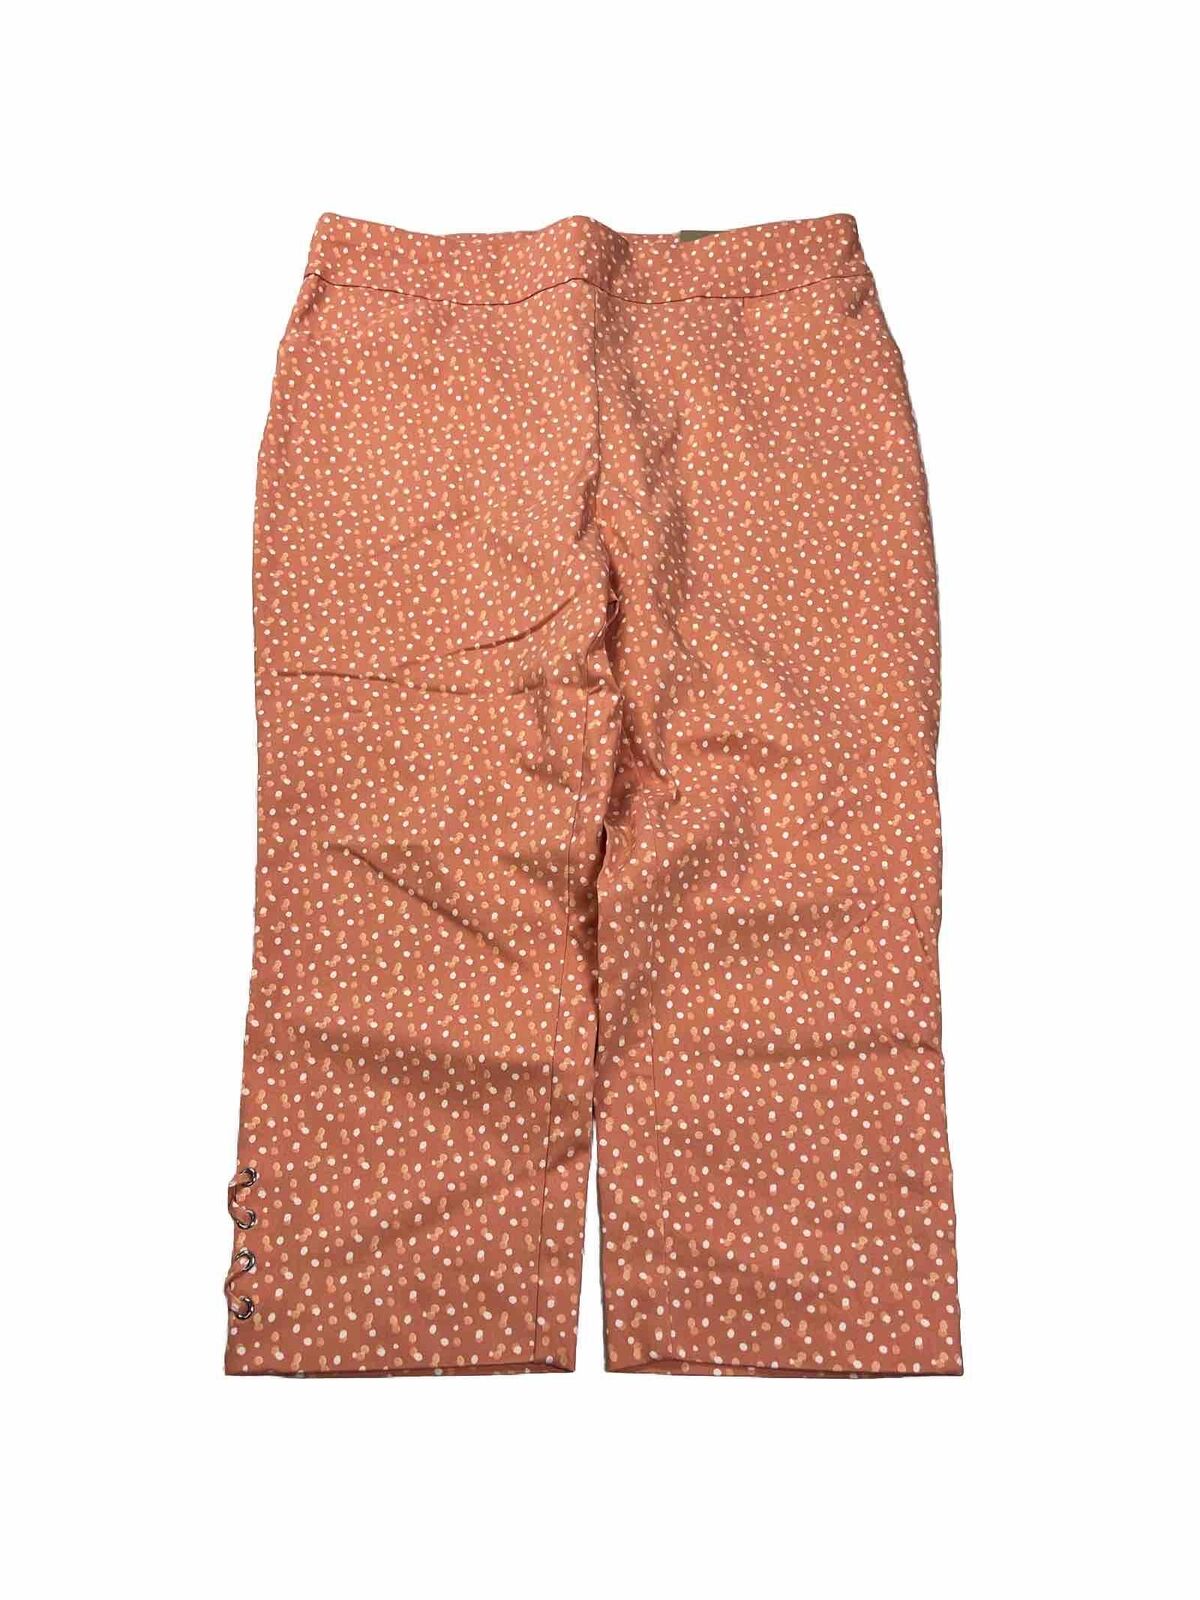 NEW Chico's Women's Orange Perfect Stretch Josie Slim Capri Pants -2.5/14